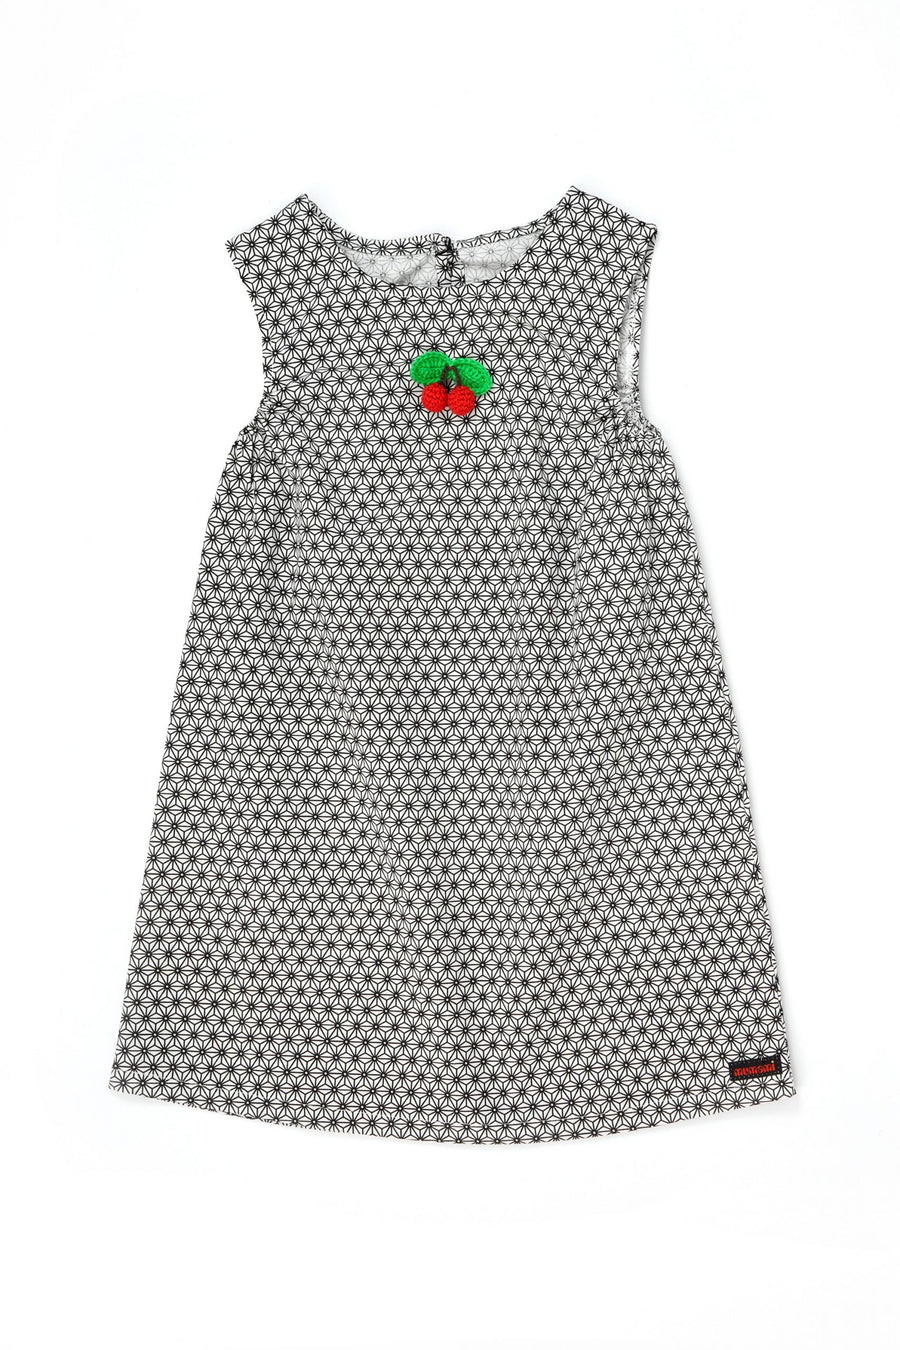 Monogram Cherry Dress